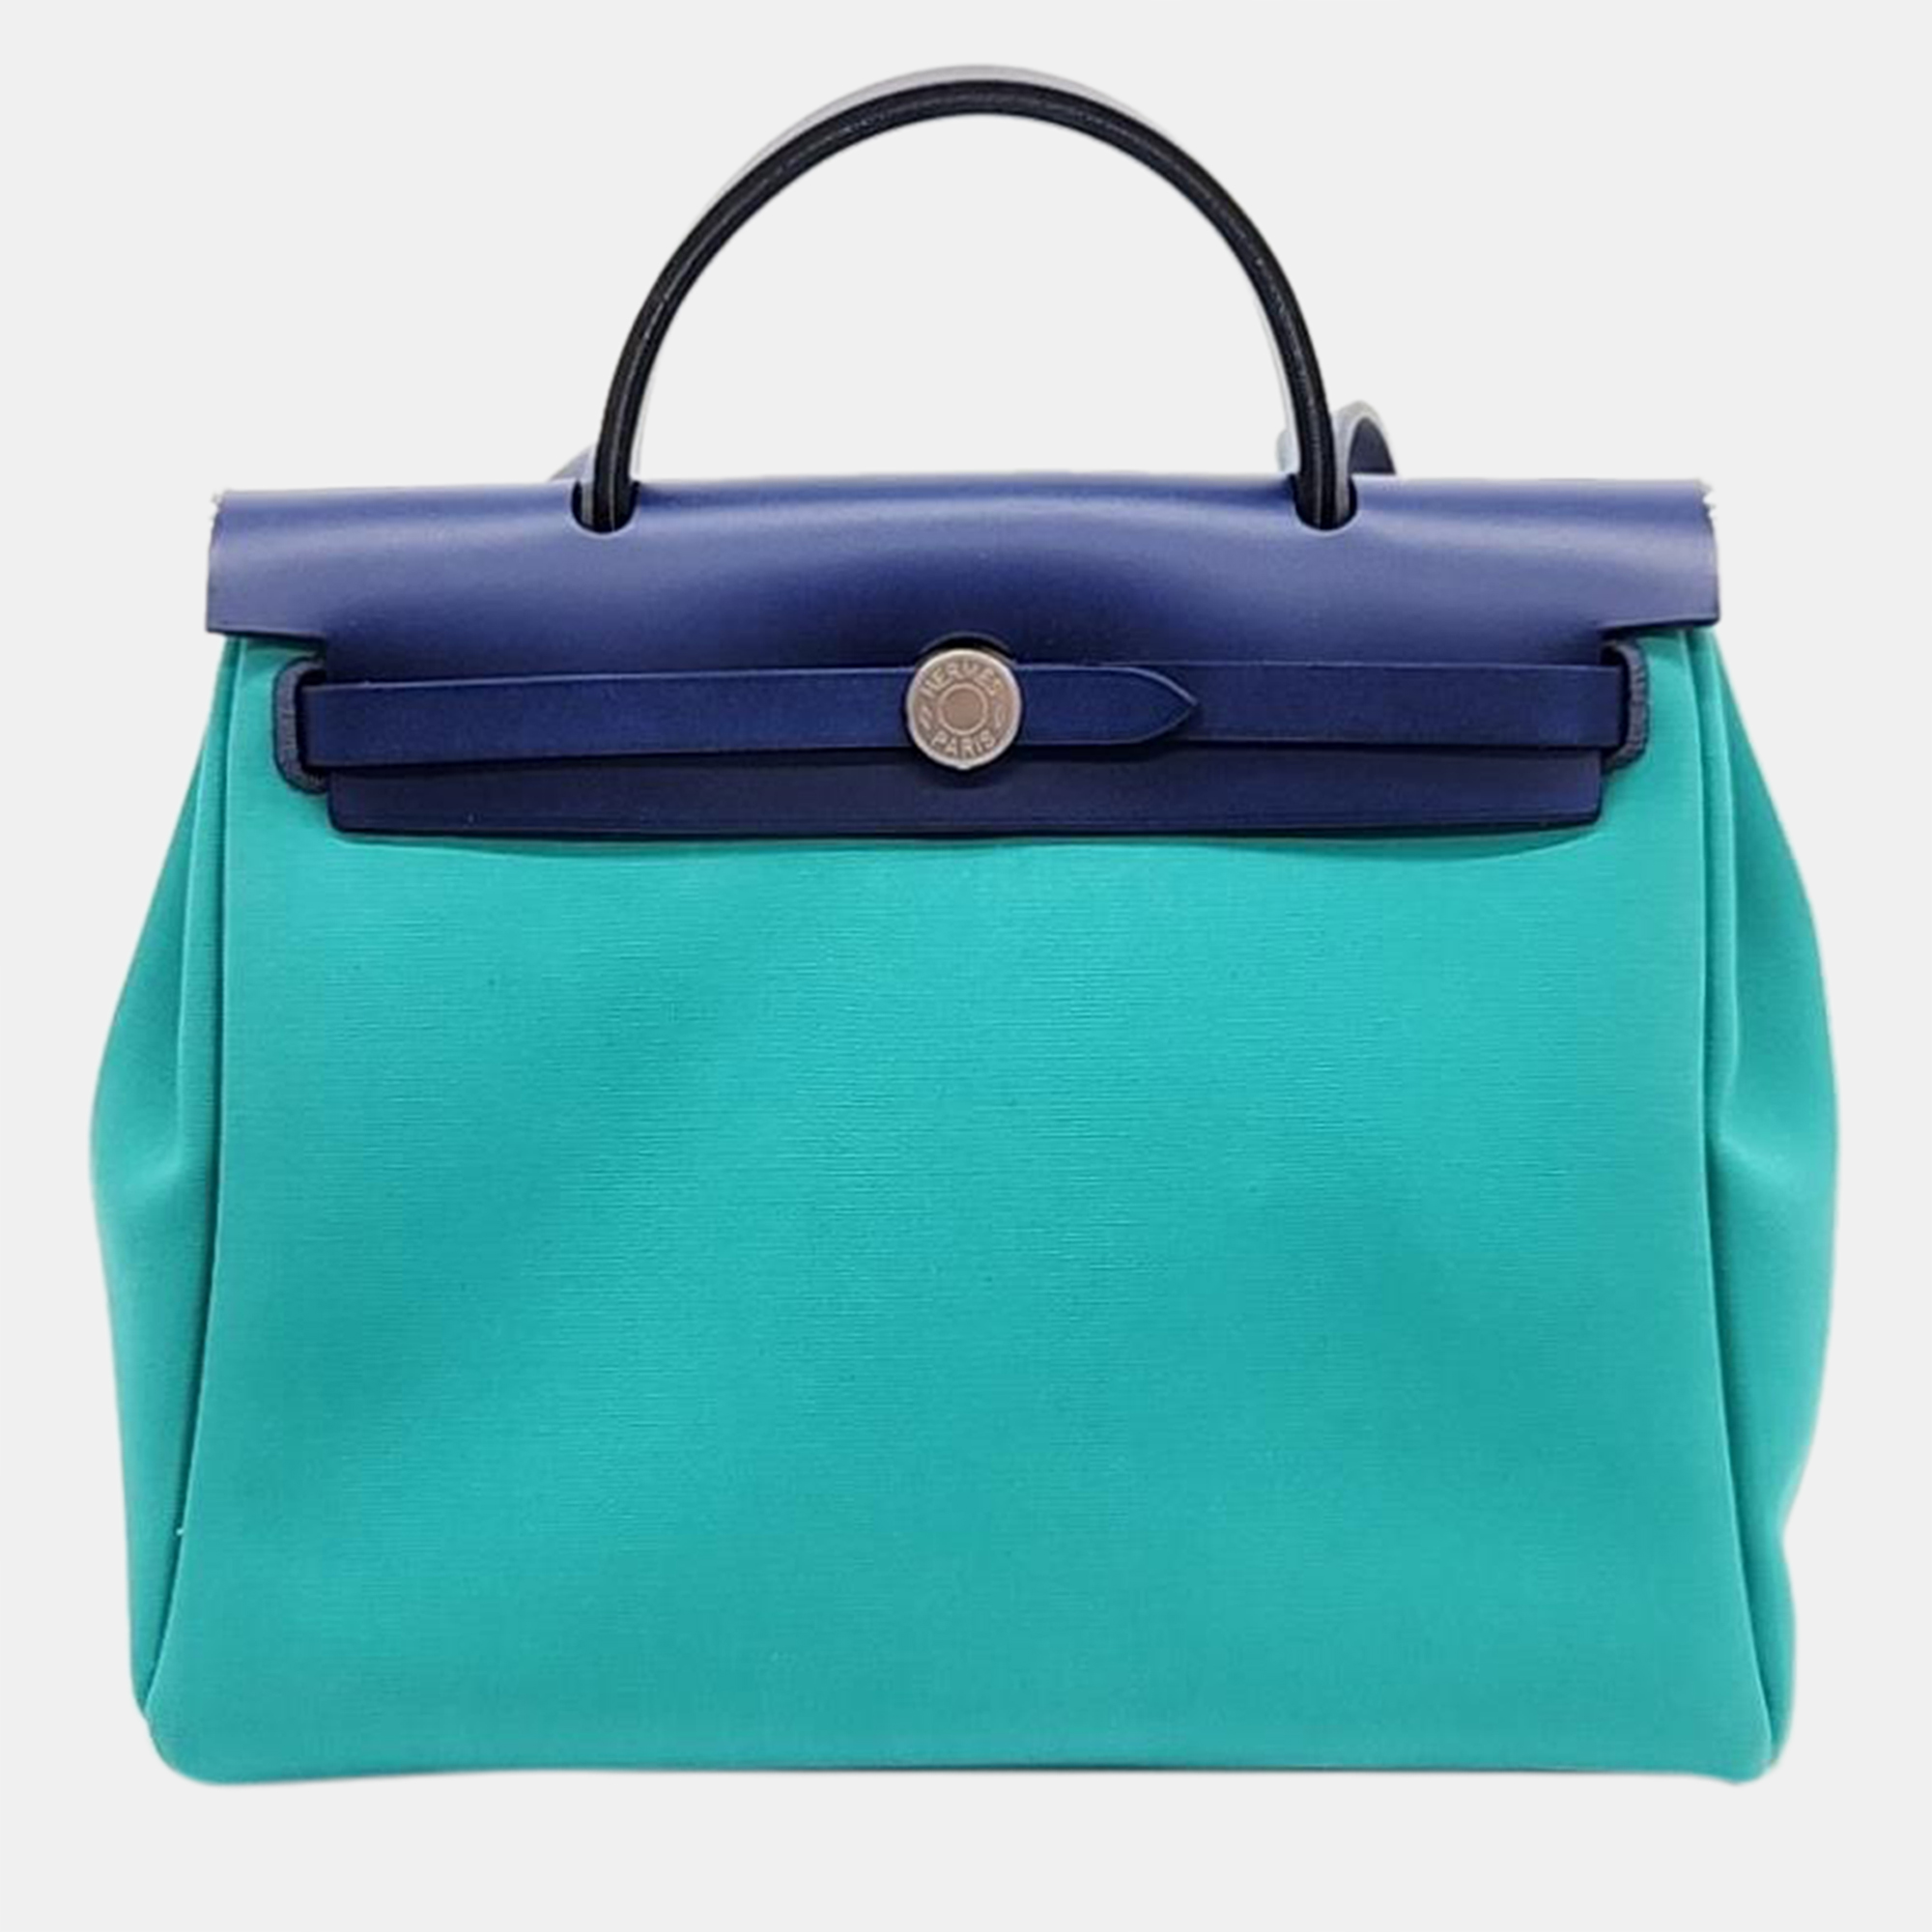 Hermes green/blue erback small bag